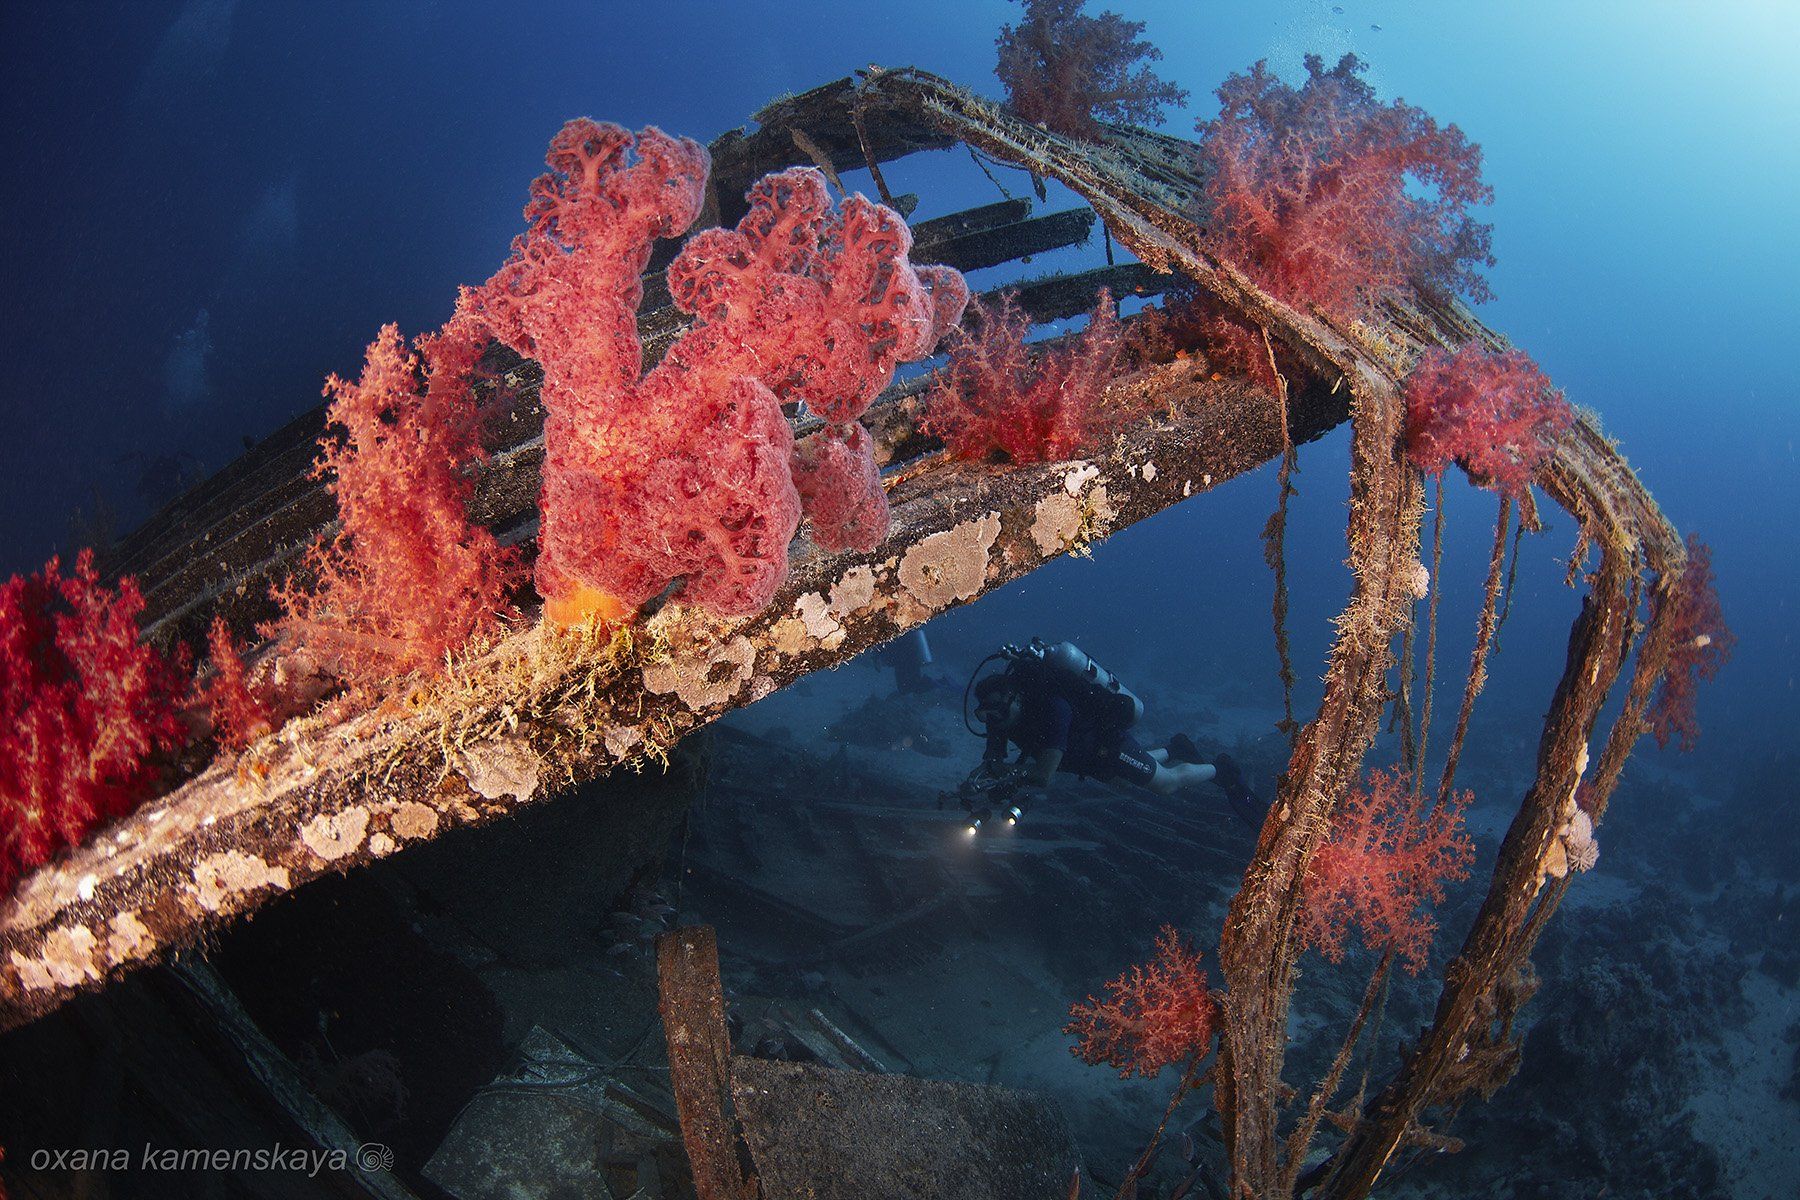 underwater wreck diving , Оксана Каменская